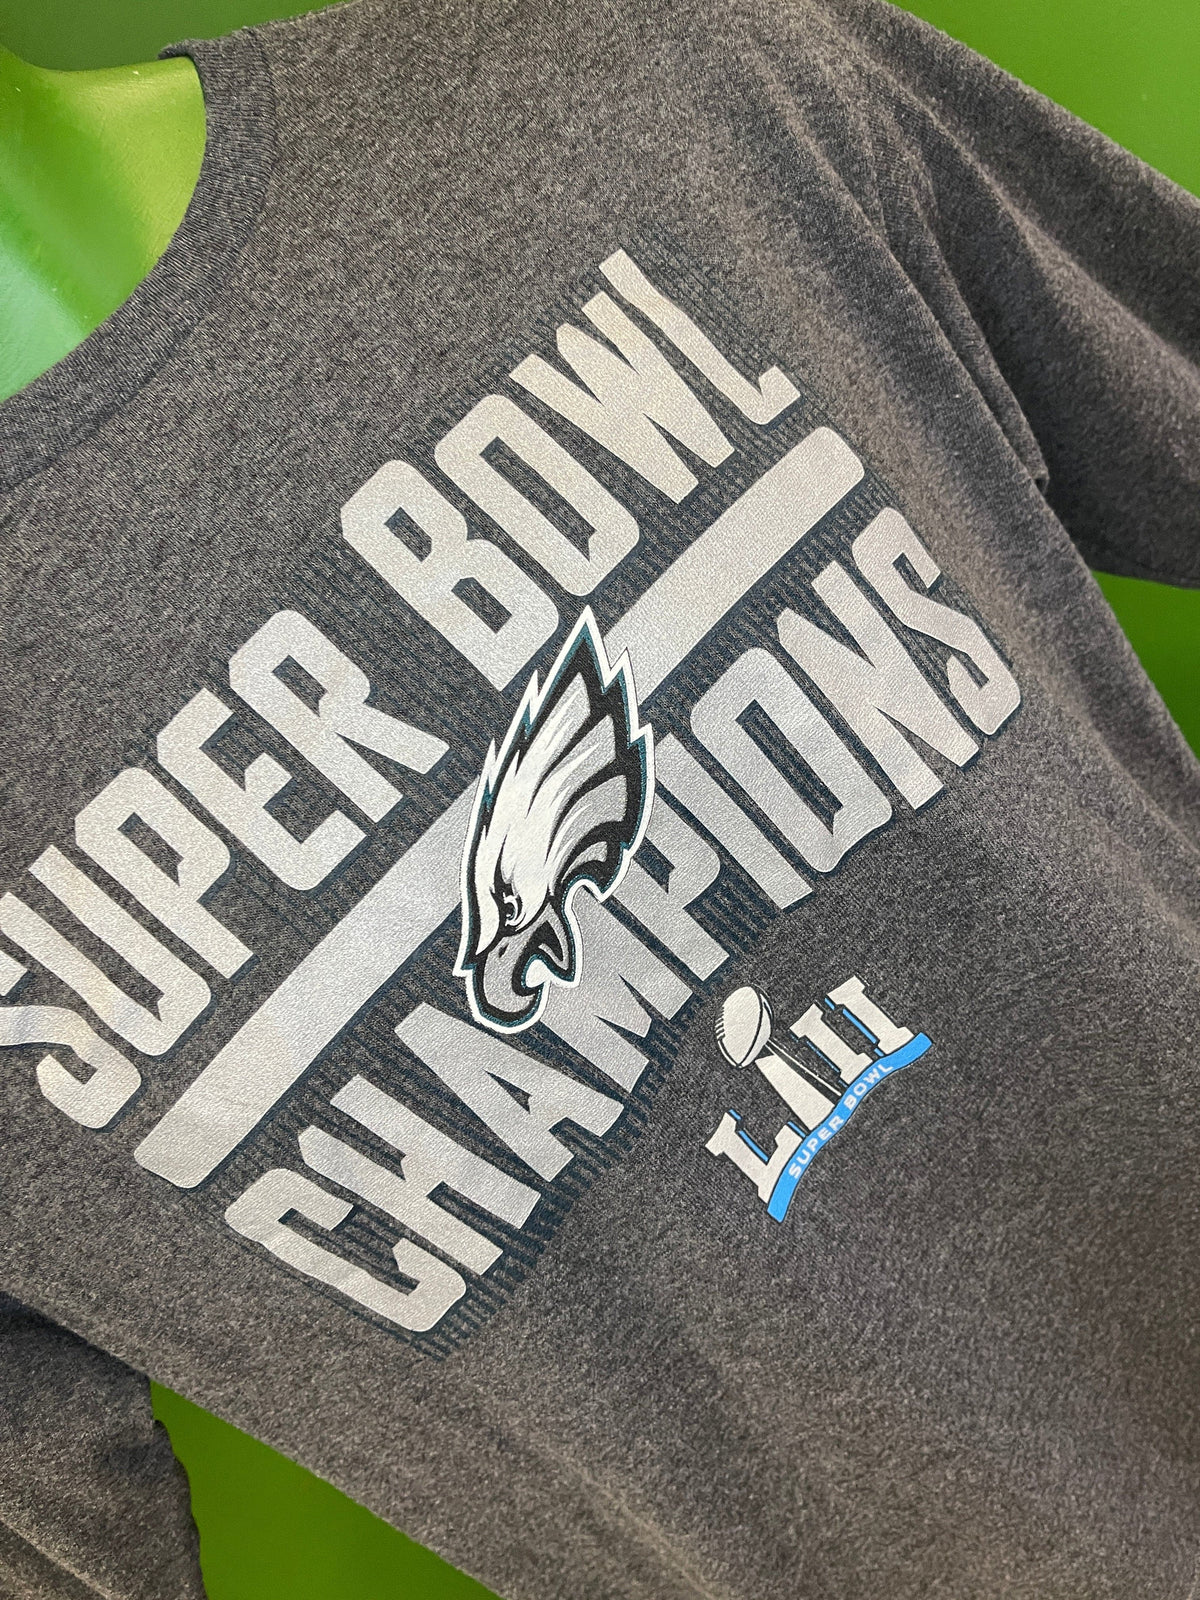 NFL Philadelphia Eagles Super Bowl LII Champions L/S T-Shirt Youth Large 14-16